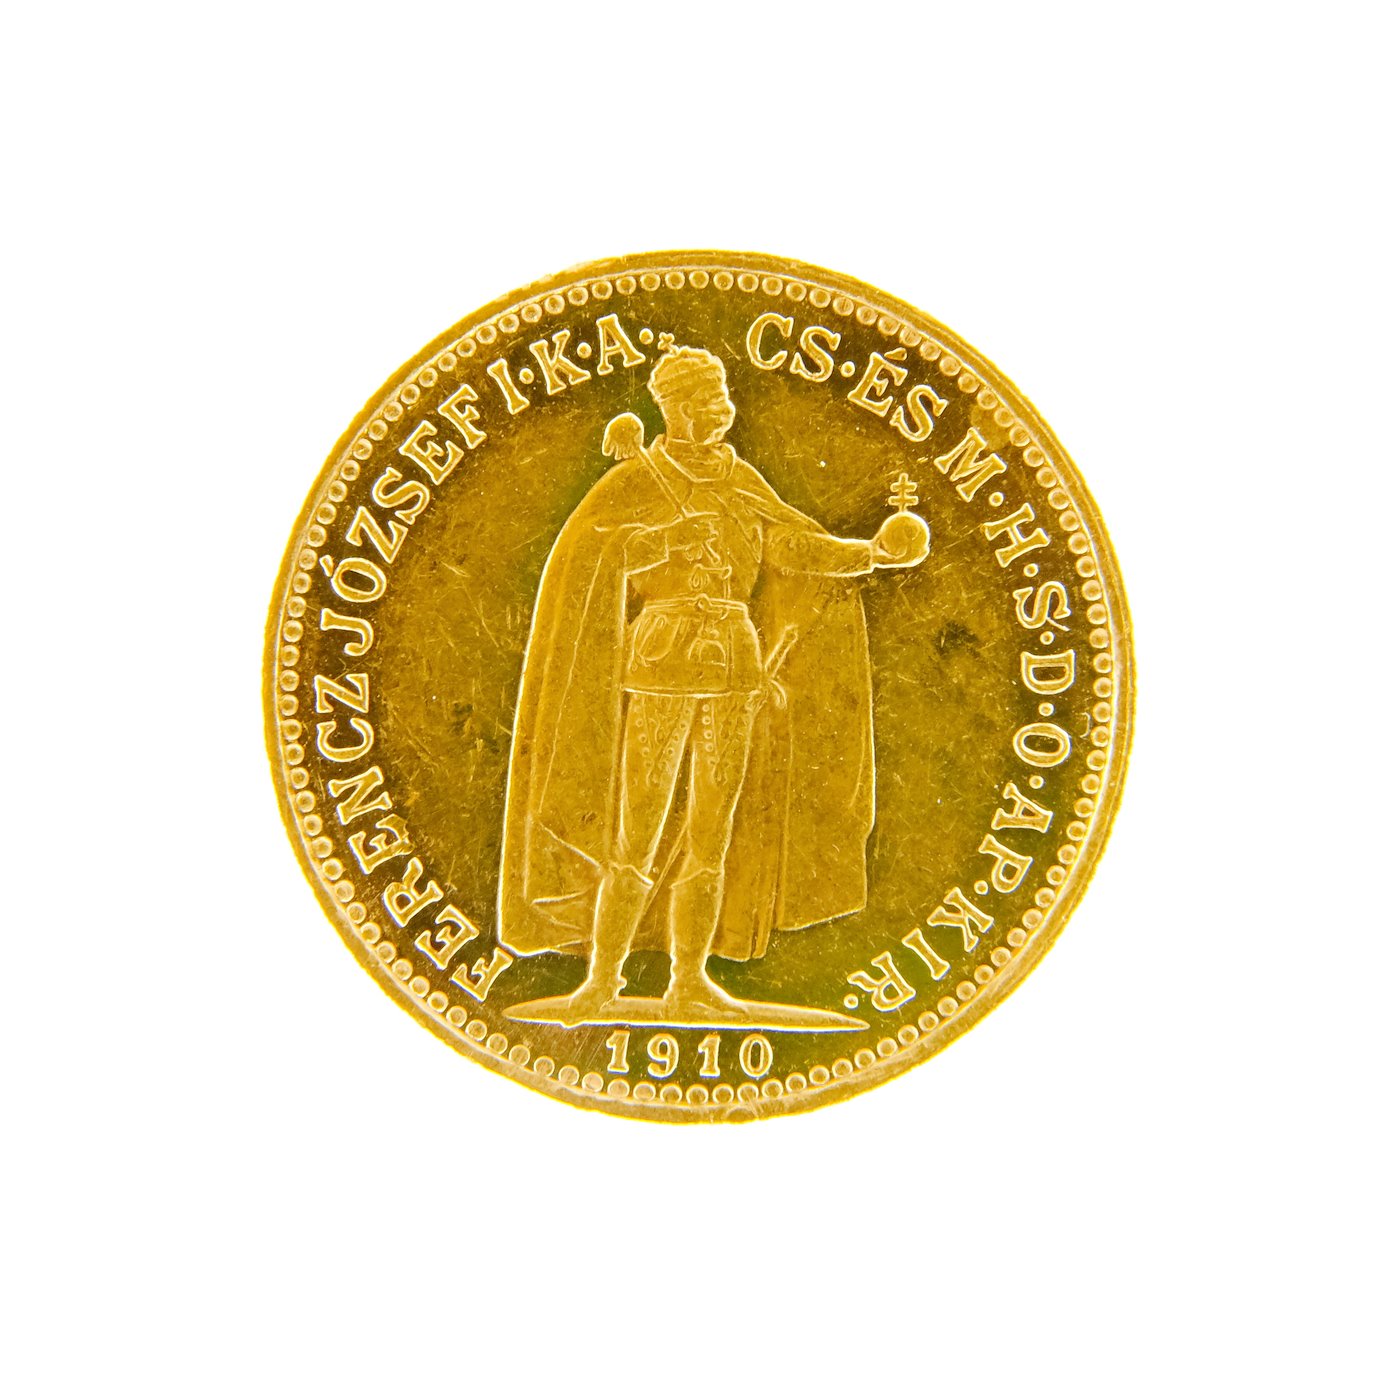 .. - Rakousko Uhersko zlatá 10 Koruna 1910 K.B. uherská,  zlato 900/1000, hrubá hmotnost 3,387g